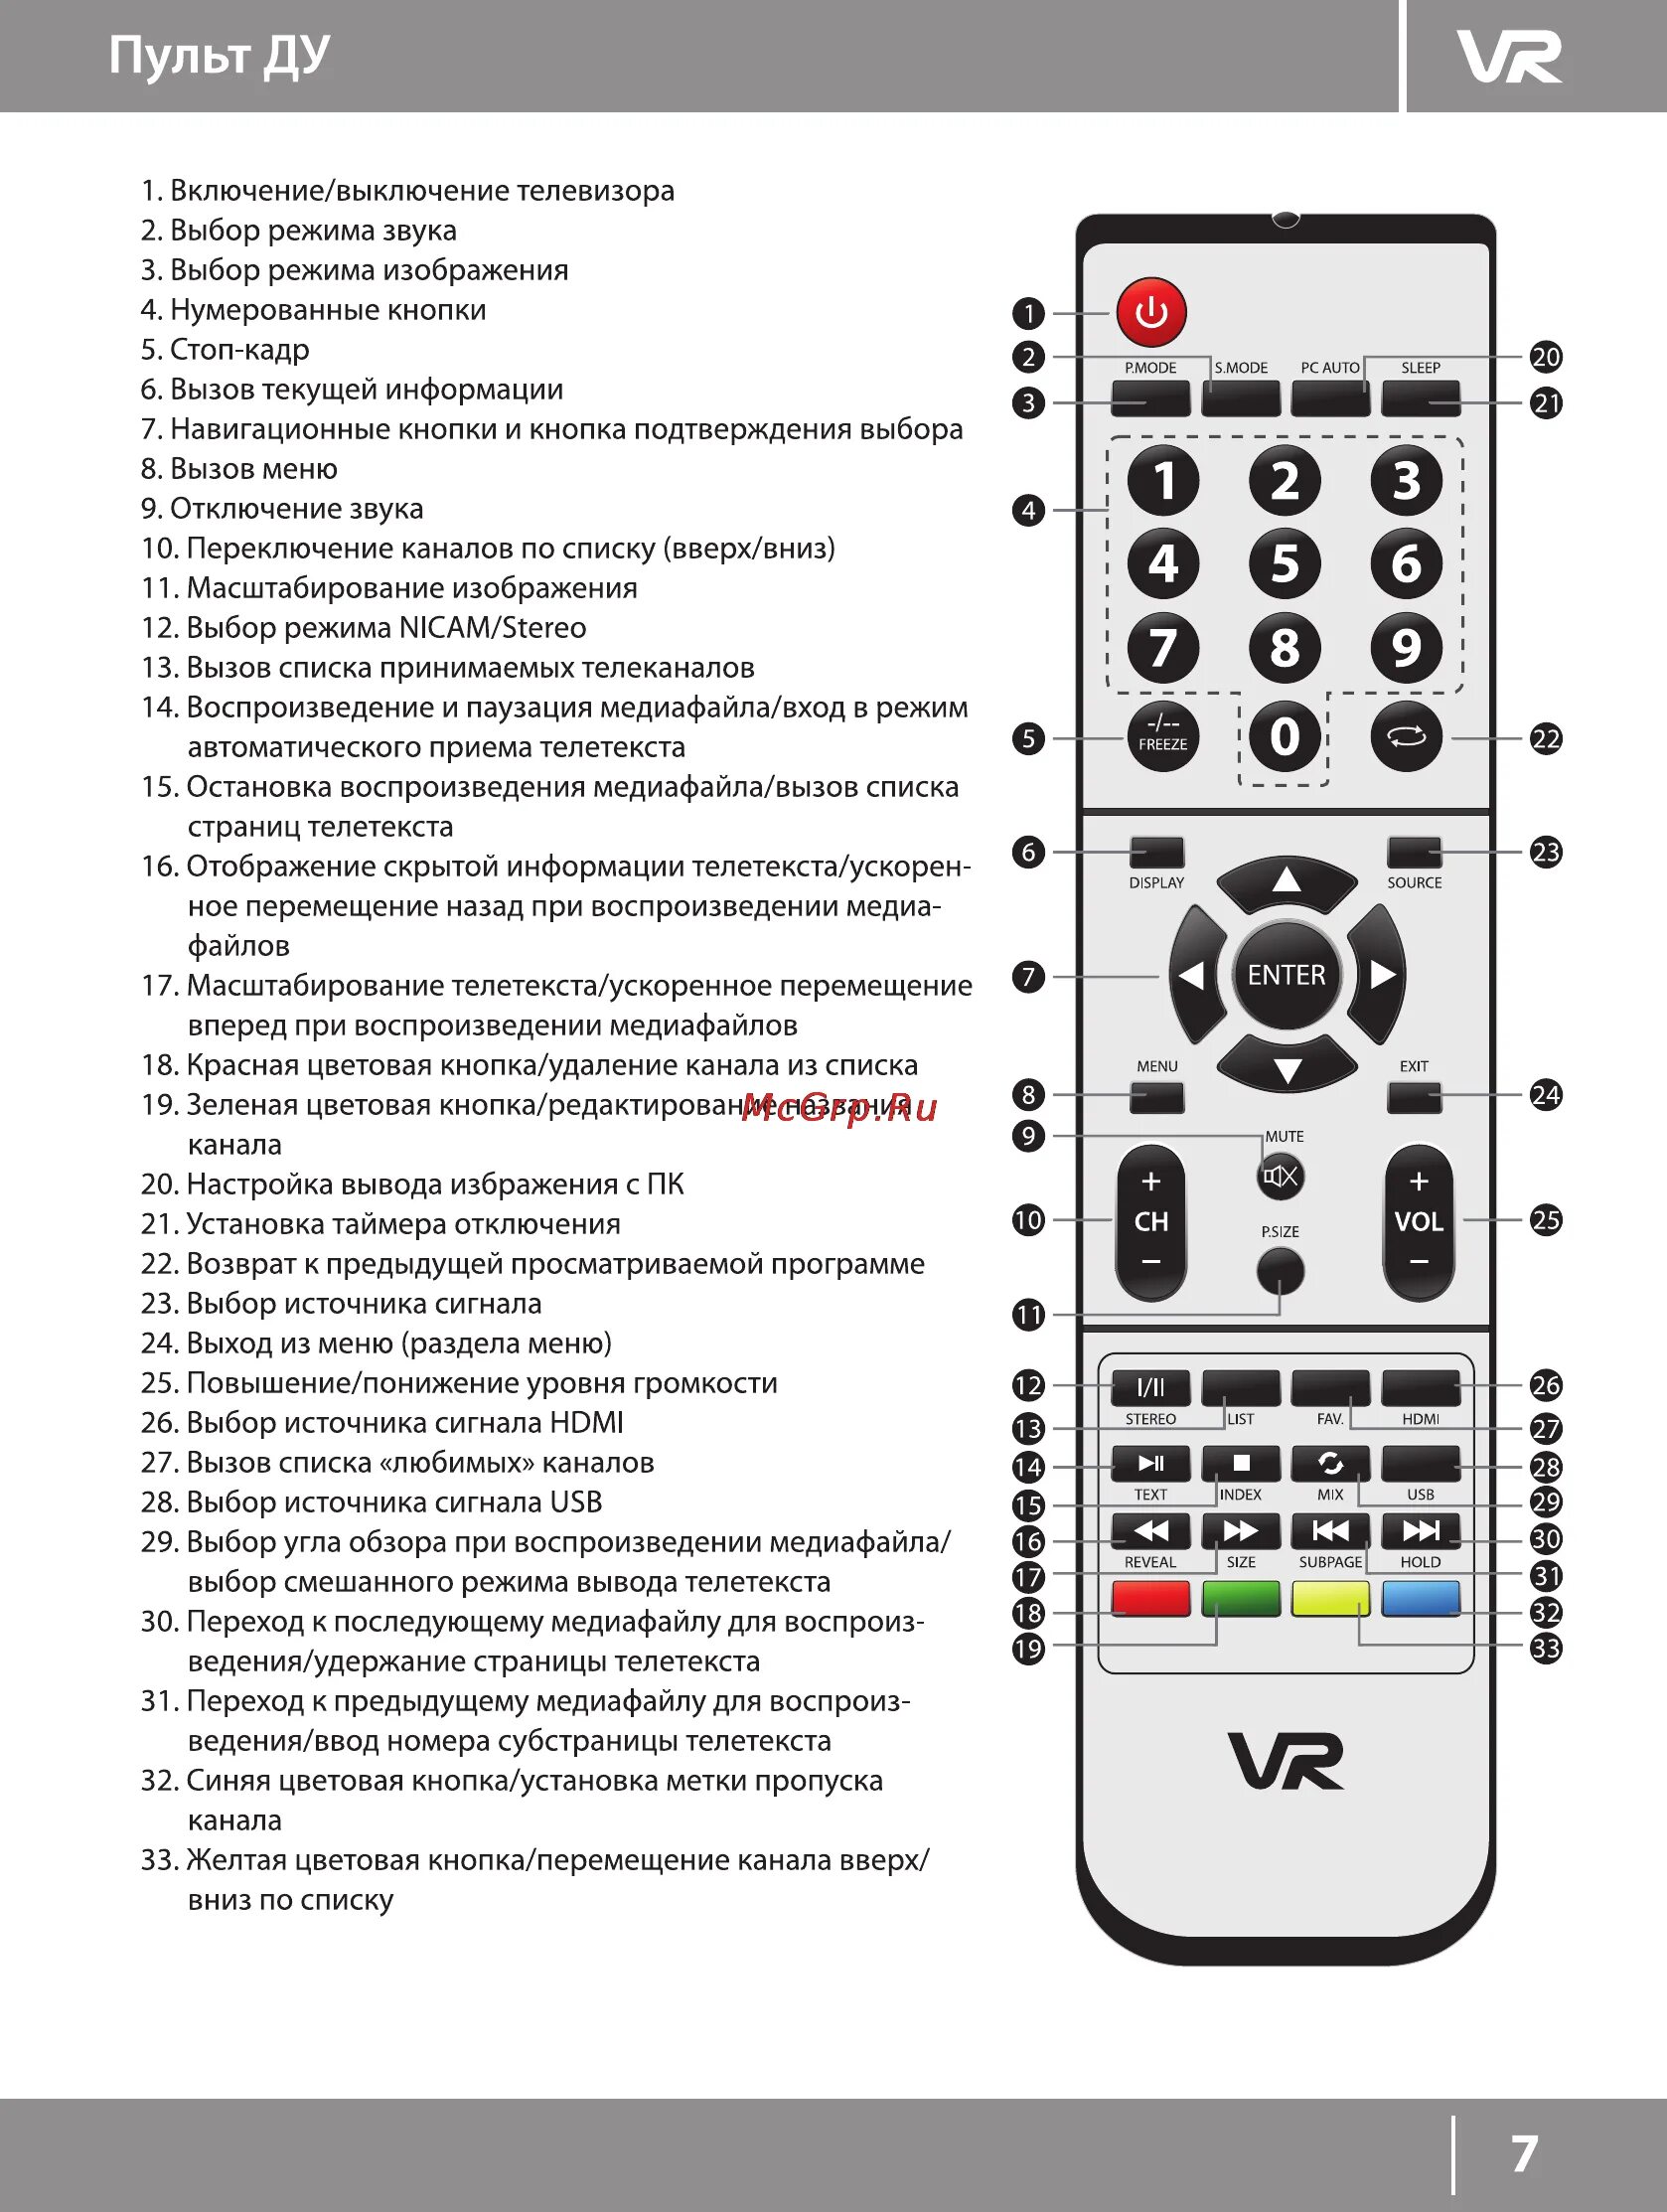 Звук на пульте lg. Телевизор VR lt-26l04v 26". Пульт Ду для TV Supra/VR lt-15n08v. VR very reliable пульт. Кнопки на пульте телевизора Горизонт обозначения.